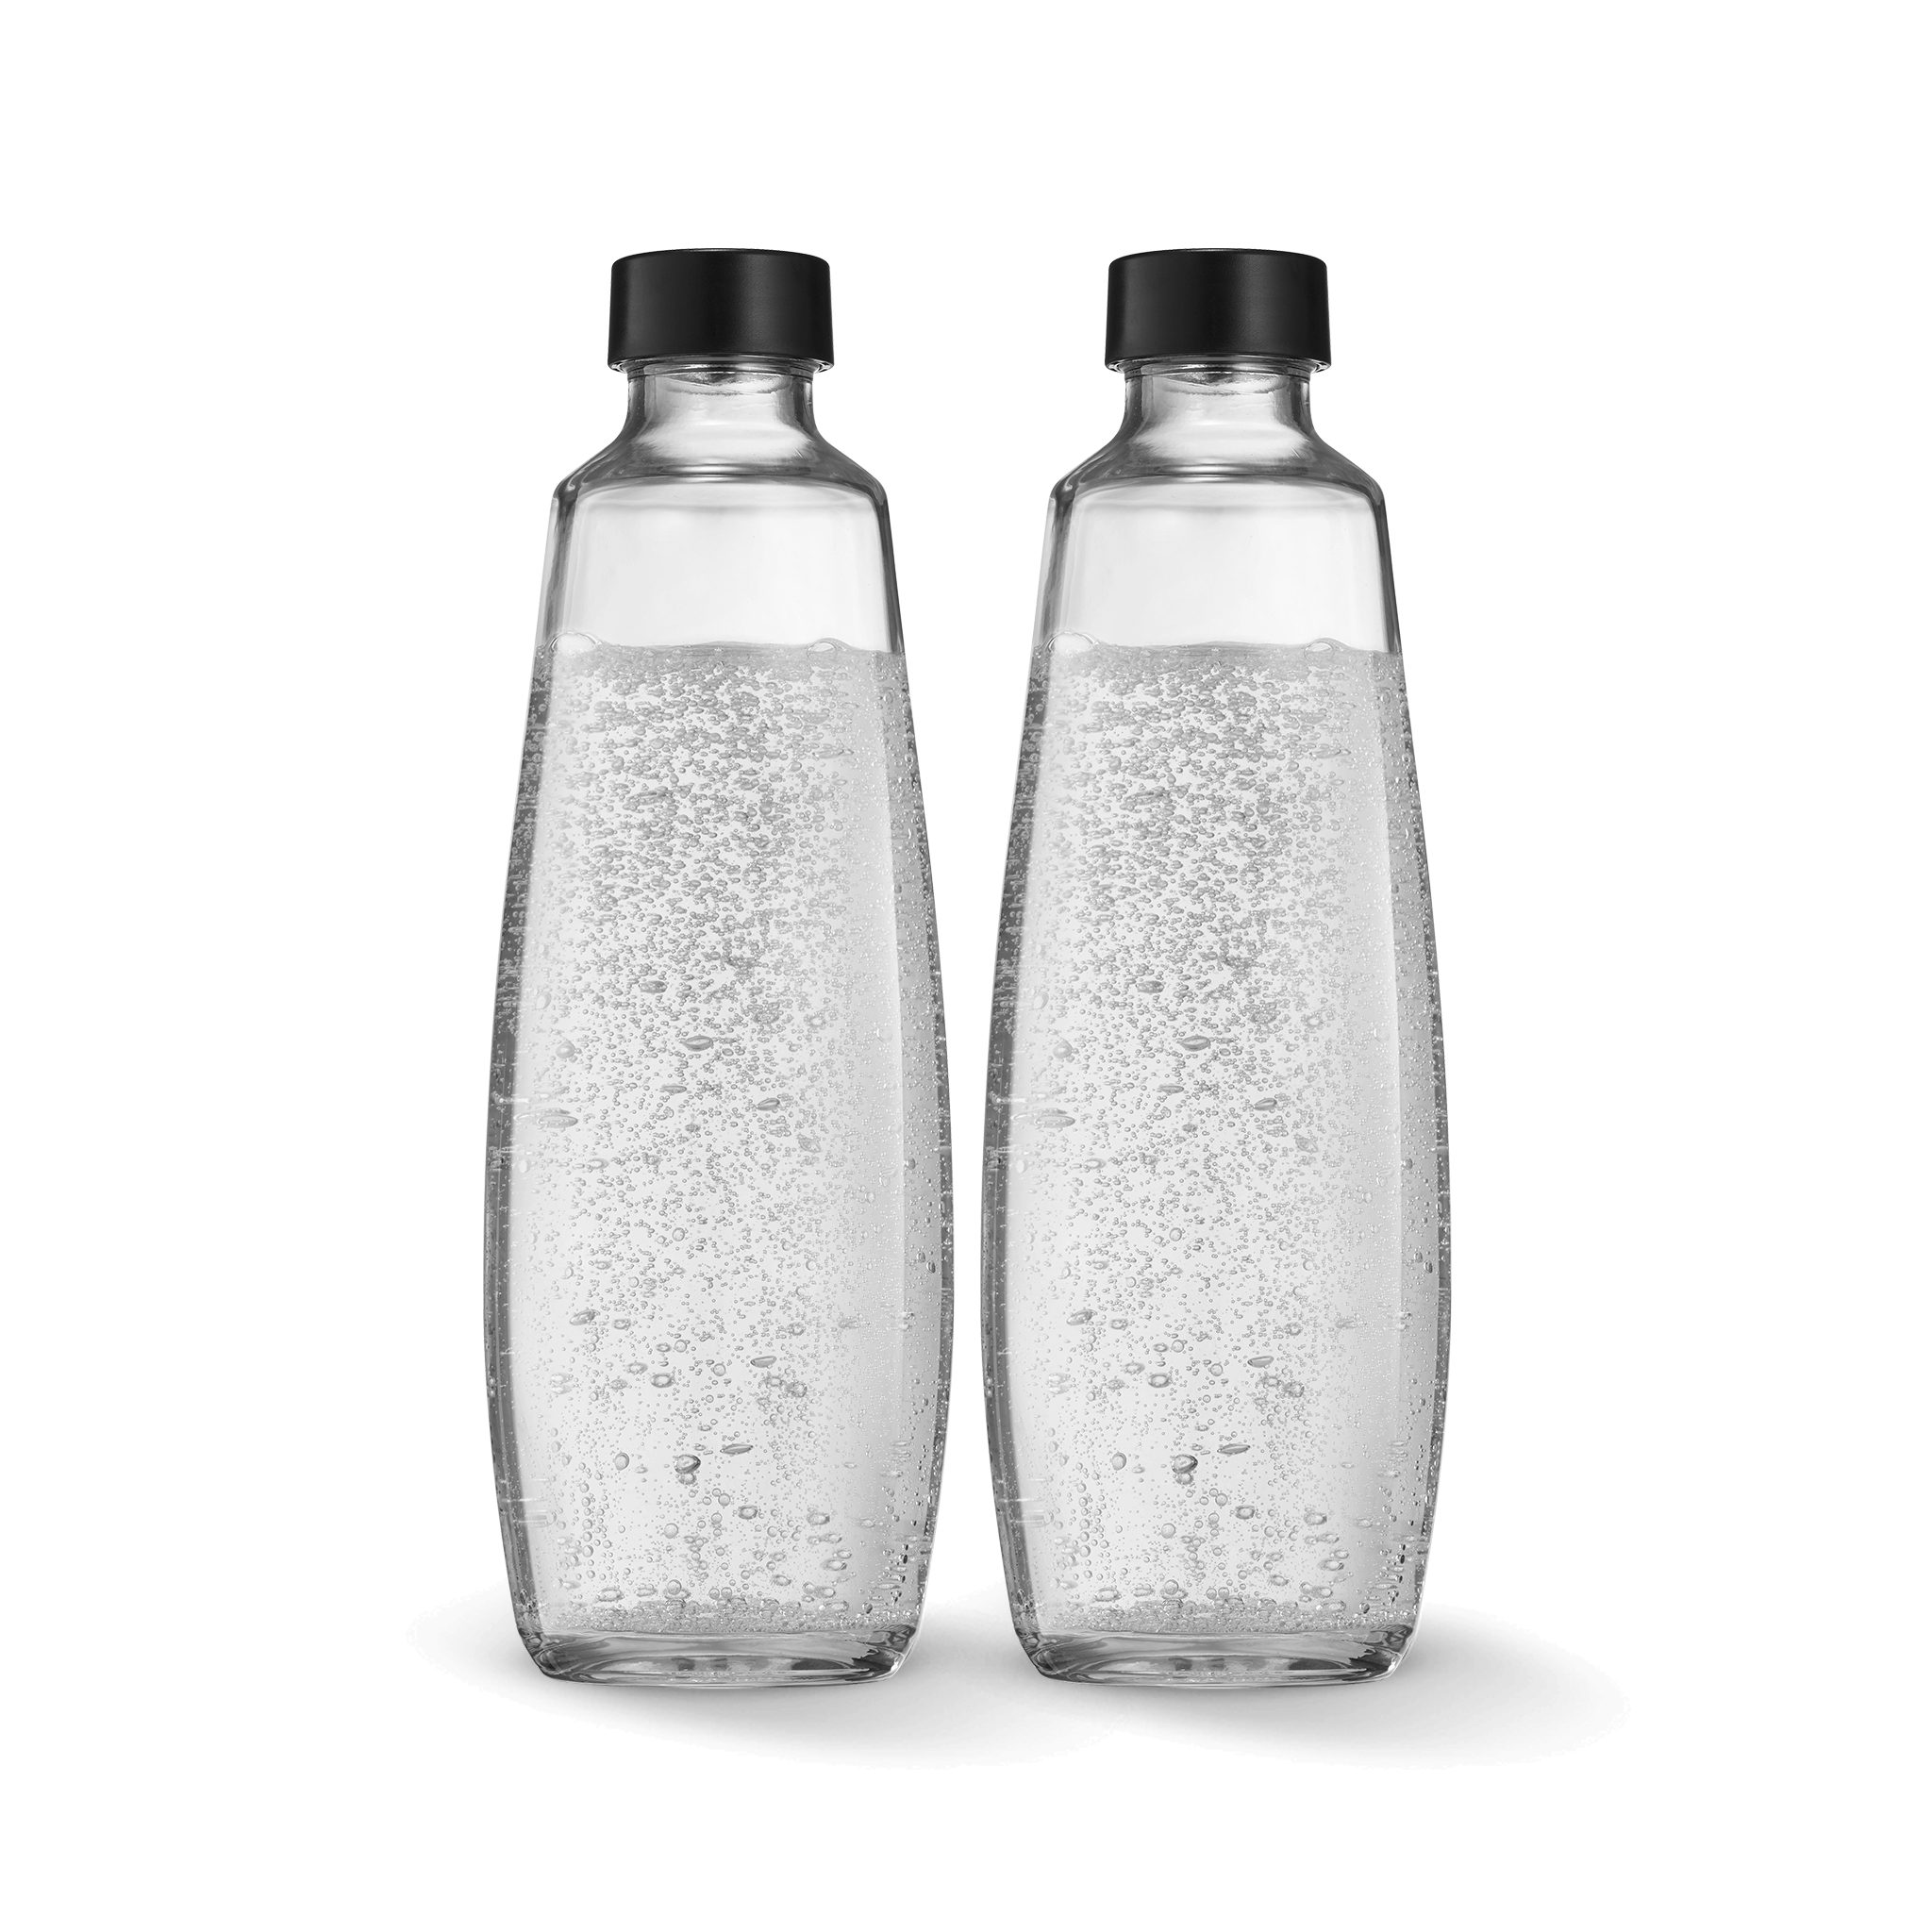 1L Duo Glass Carafe Twin pack - Black sodastream